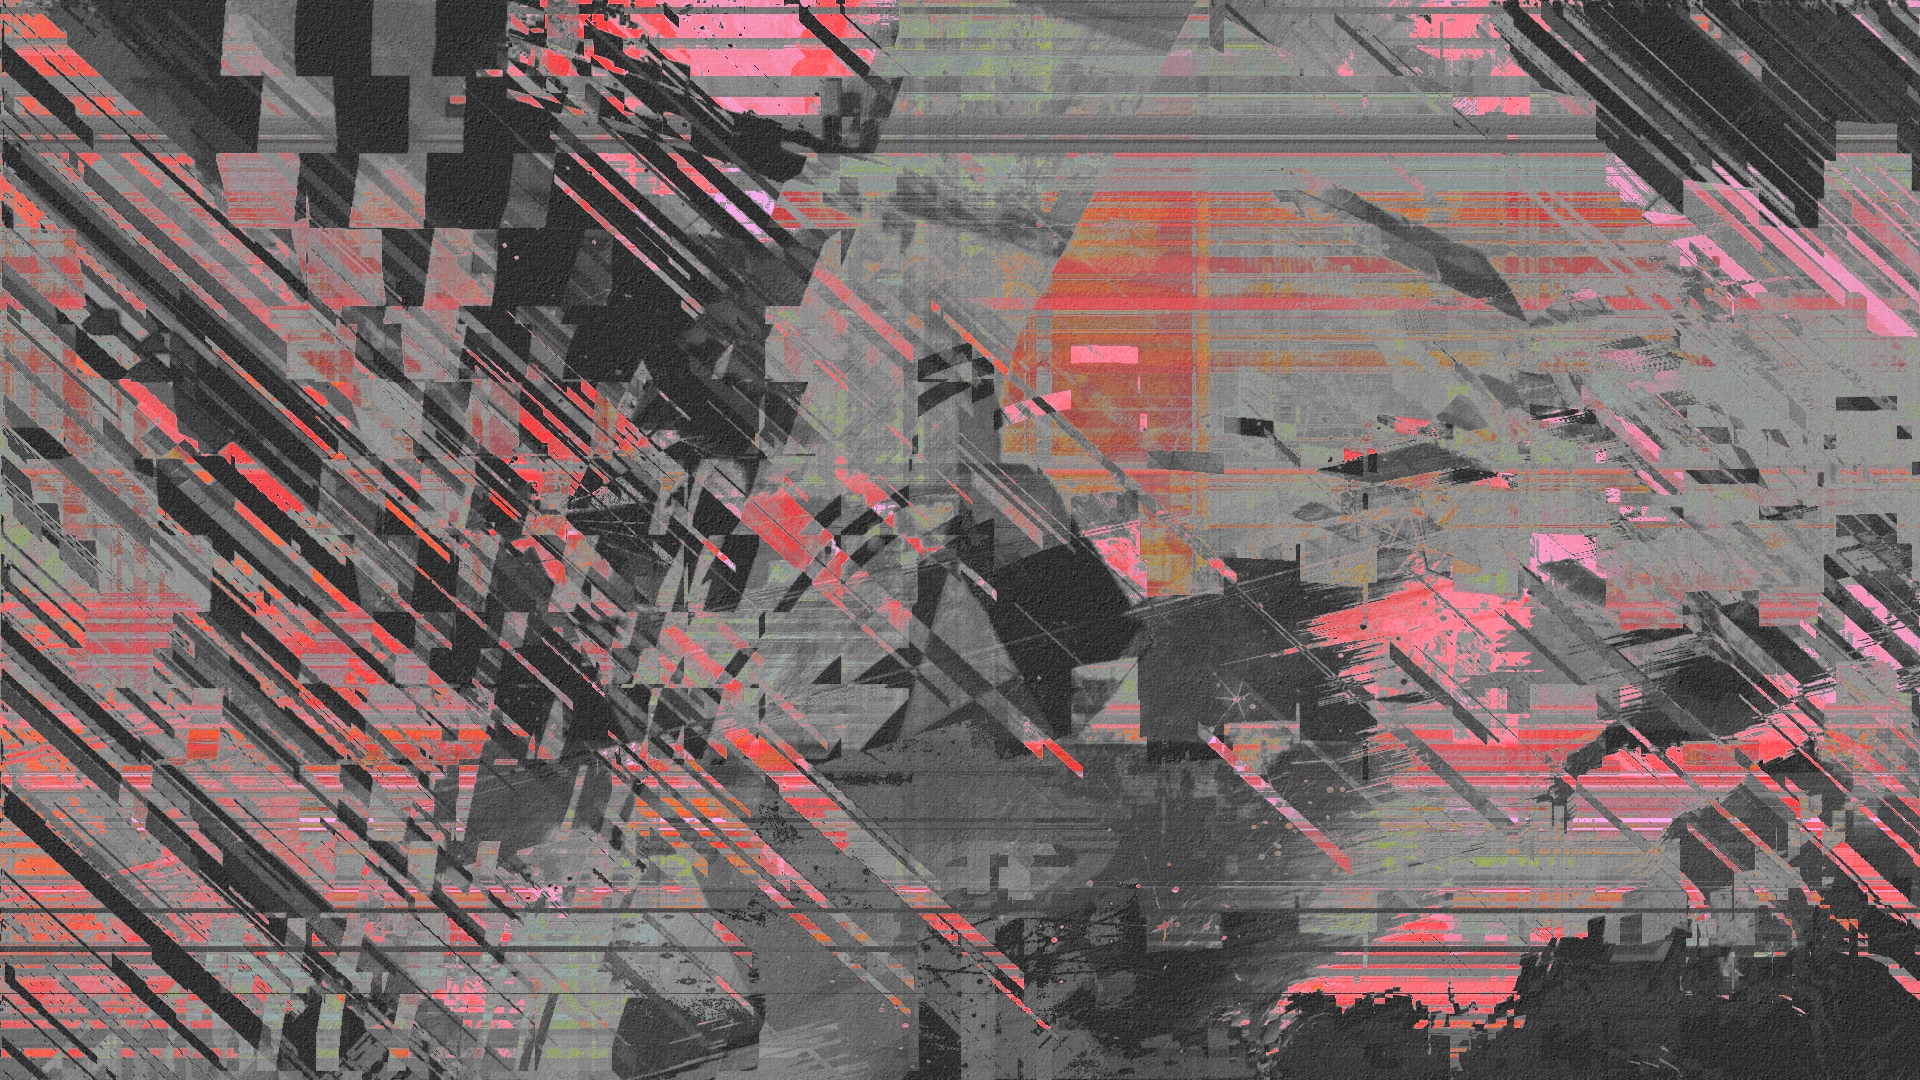 General 1920x1080 glitch art abstract digital art